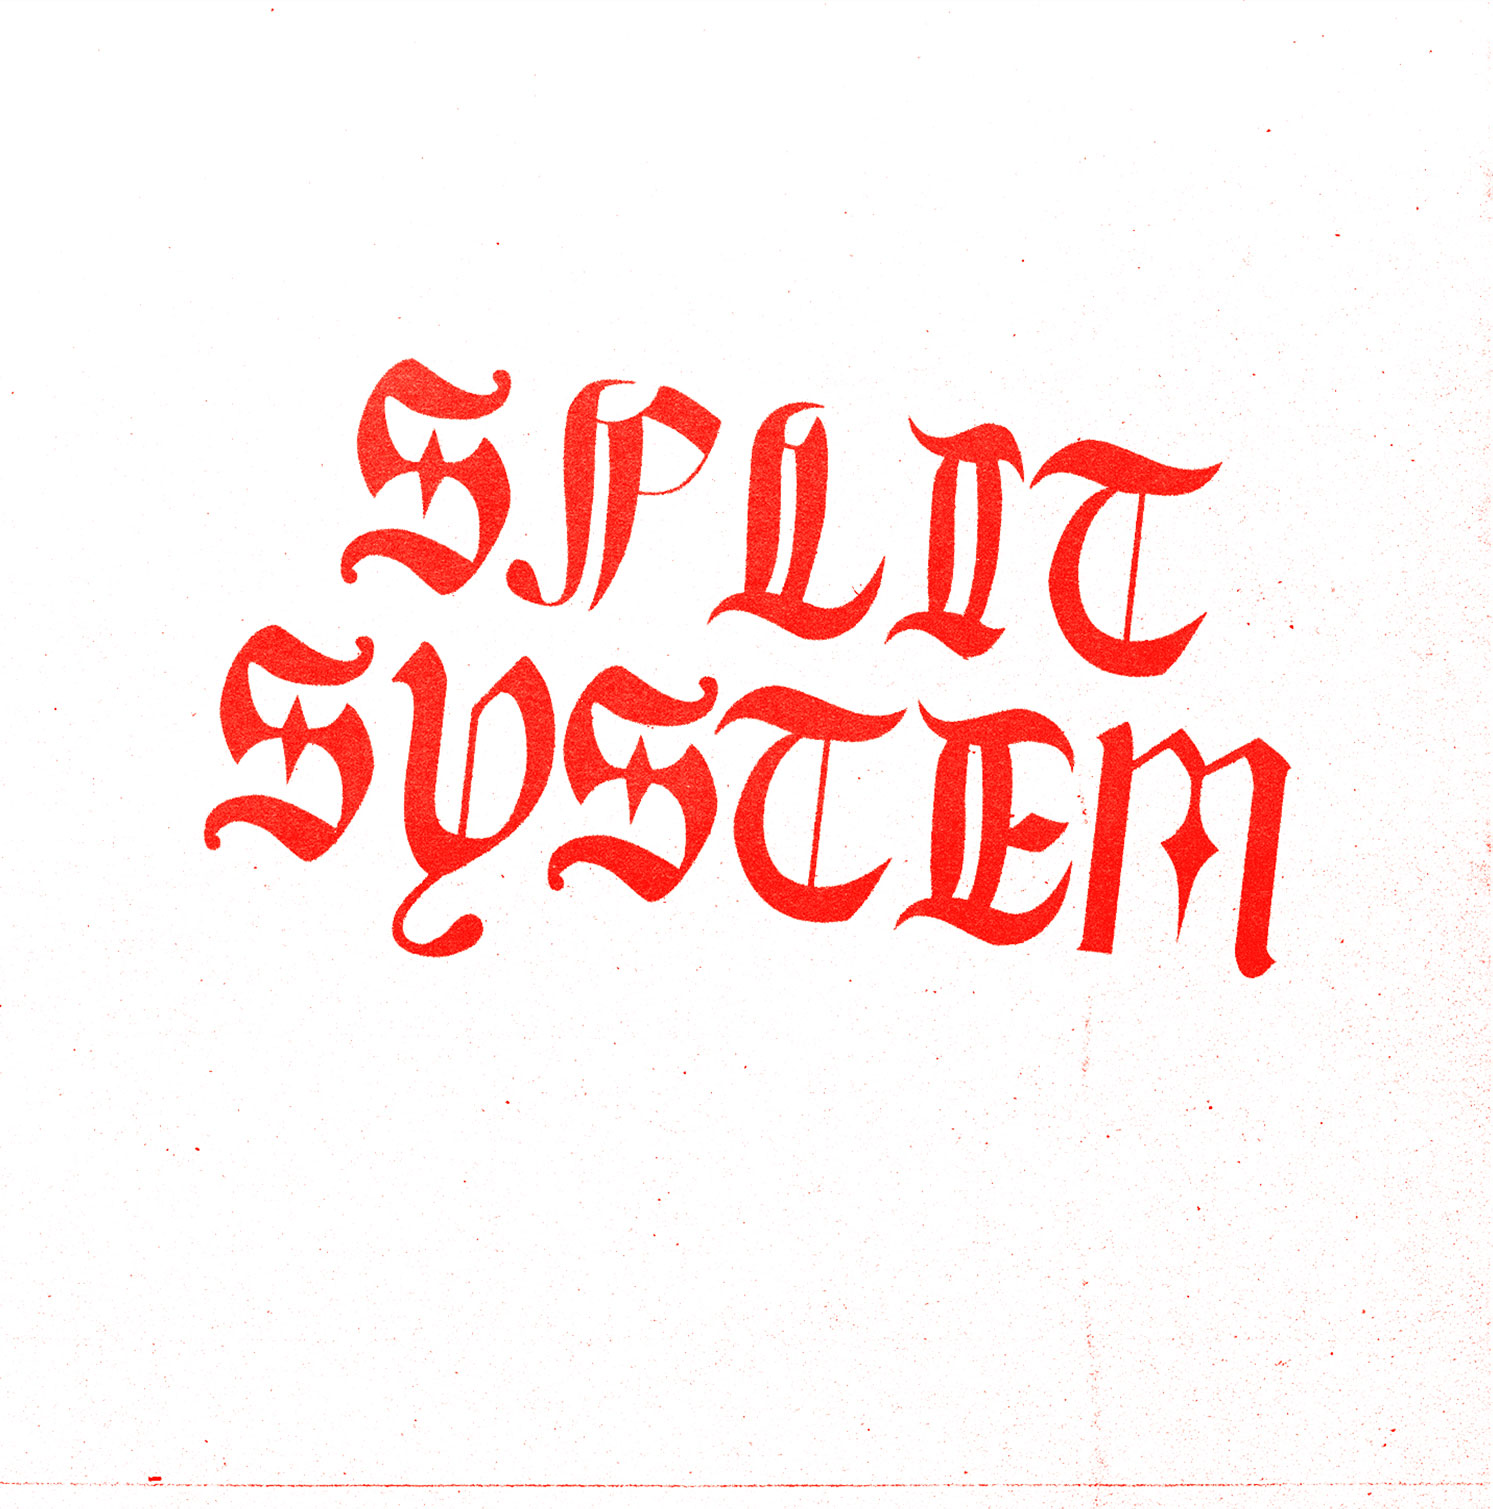 Split System 7 inch, 45t, Beast Records, Bullet, On the Street